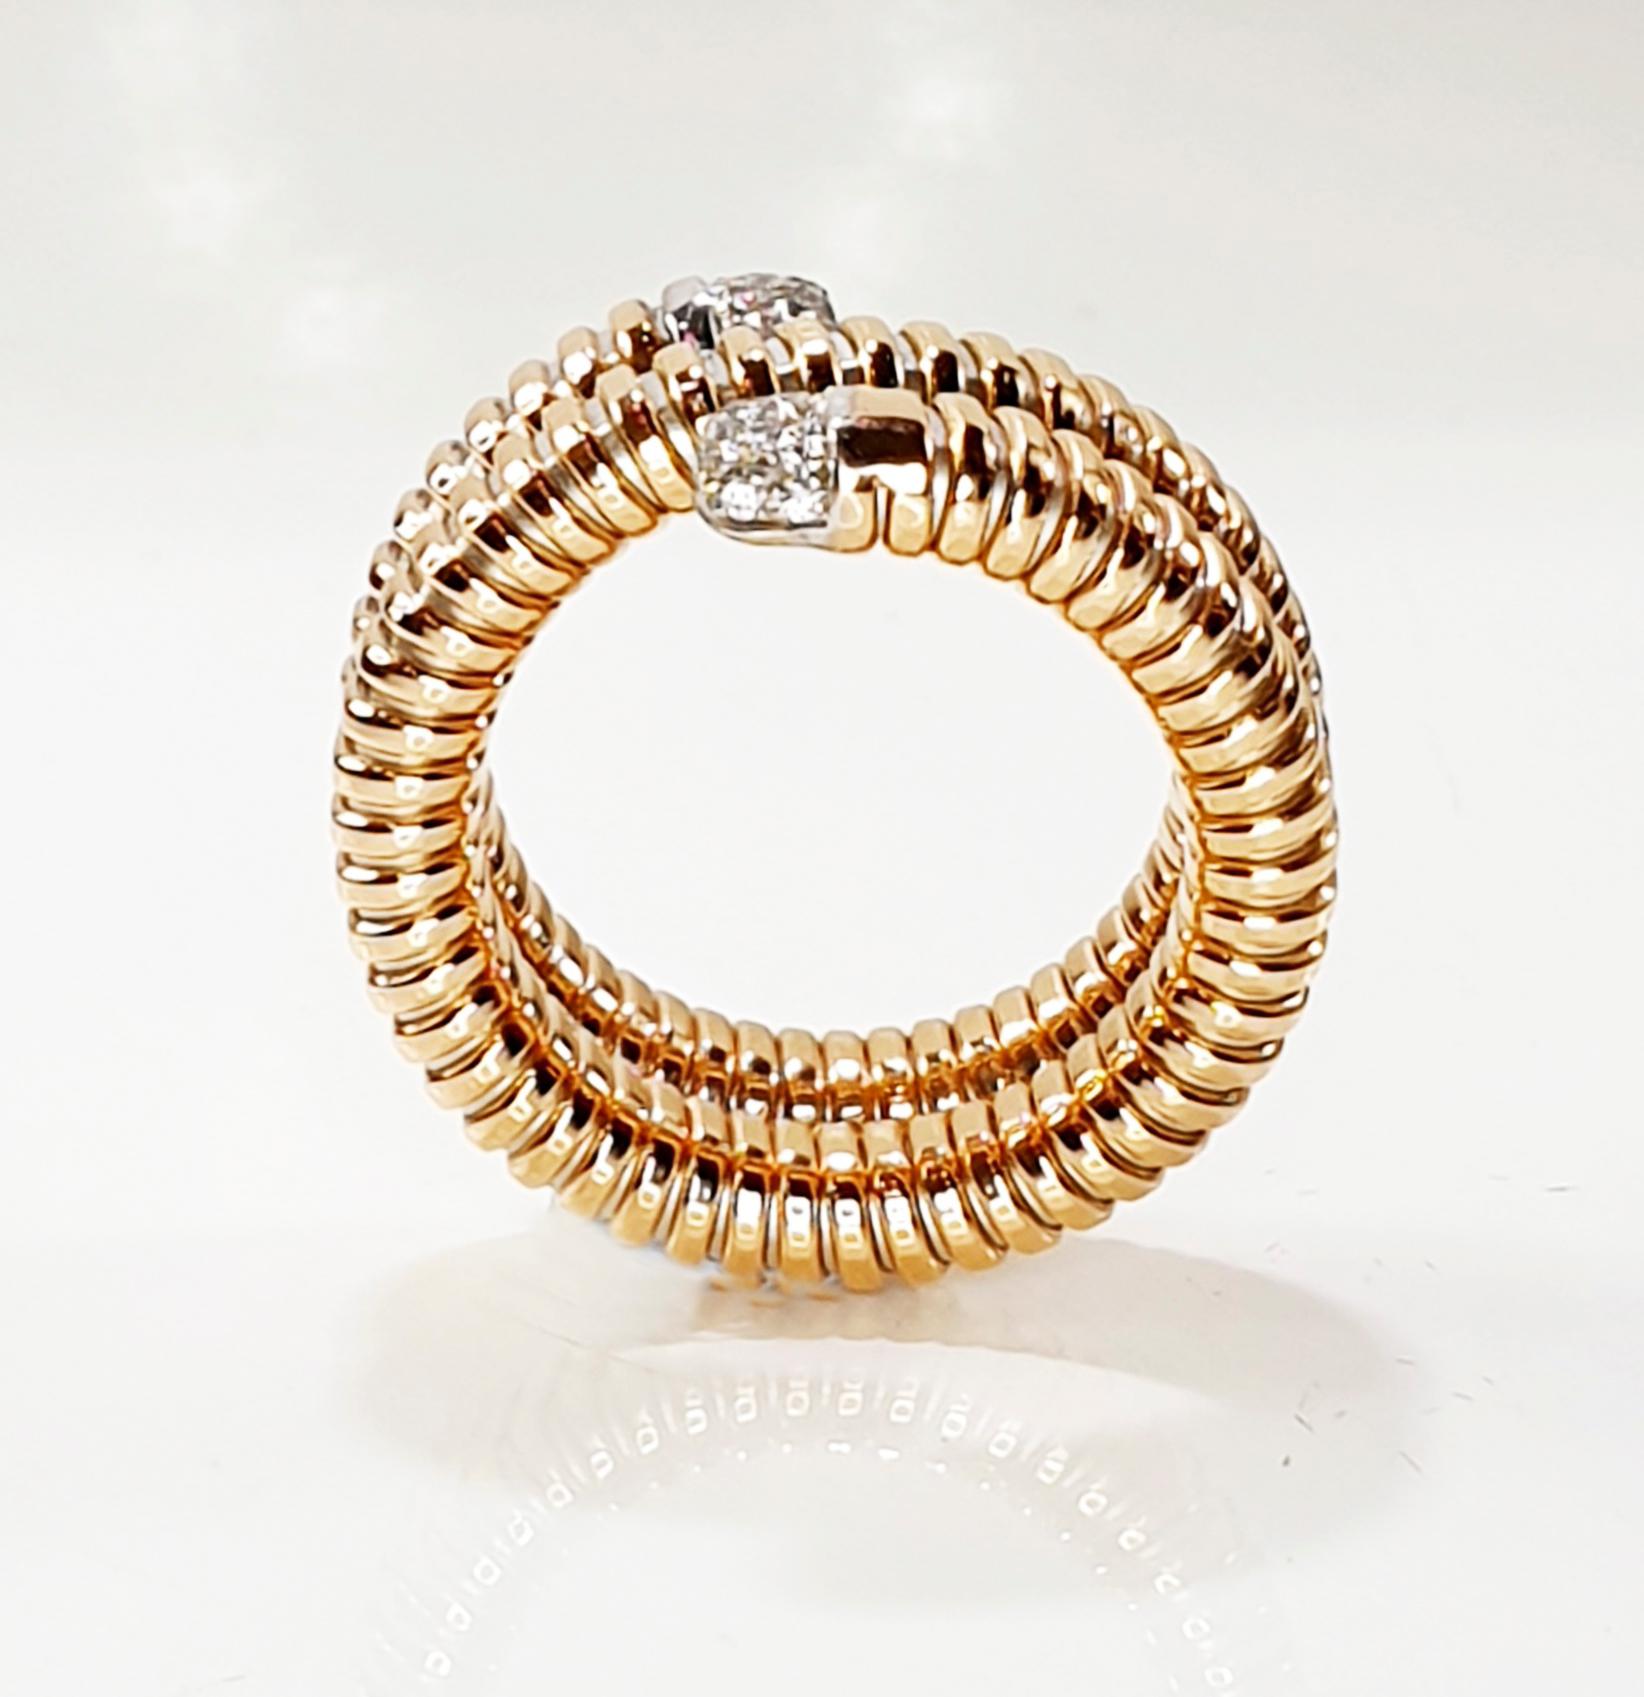 Brilliant Cut Antora Tubogas 18k Rose Gold and Pavée Diamonds Ring For Sale